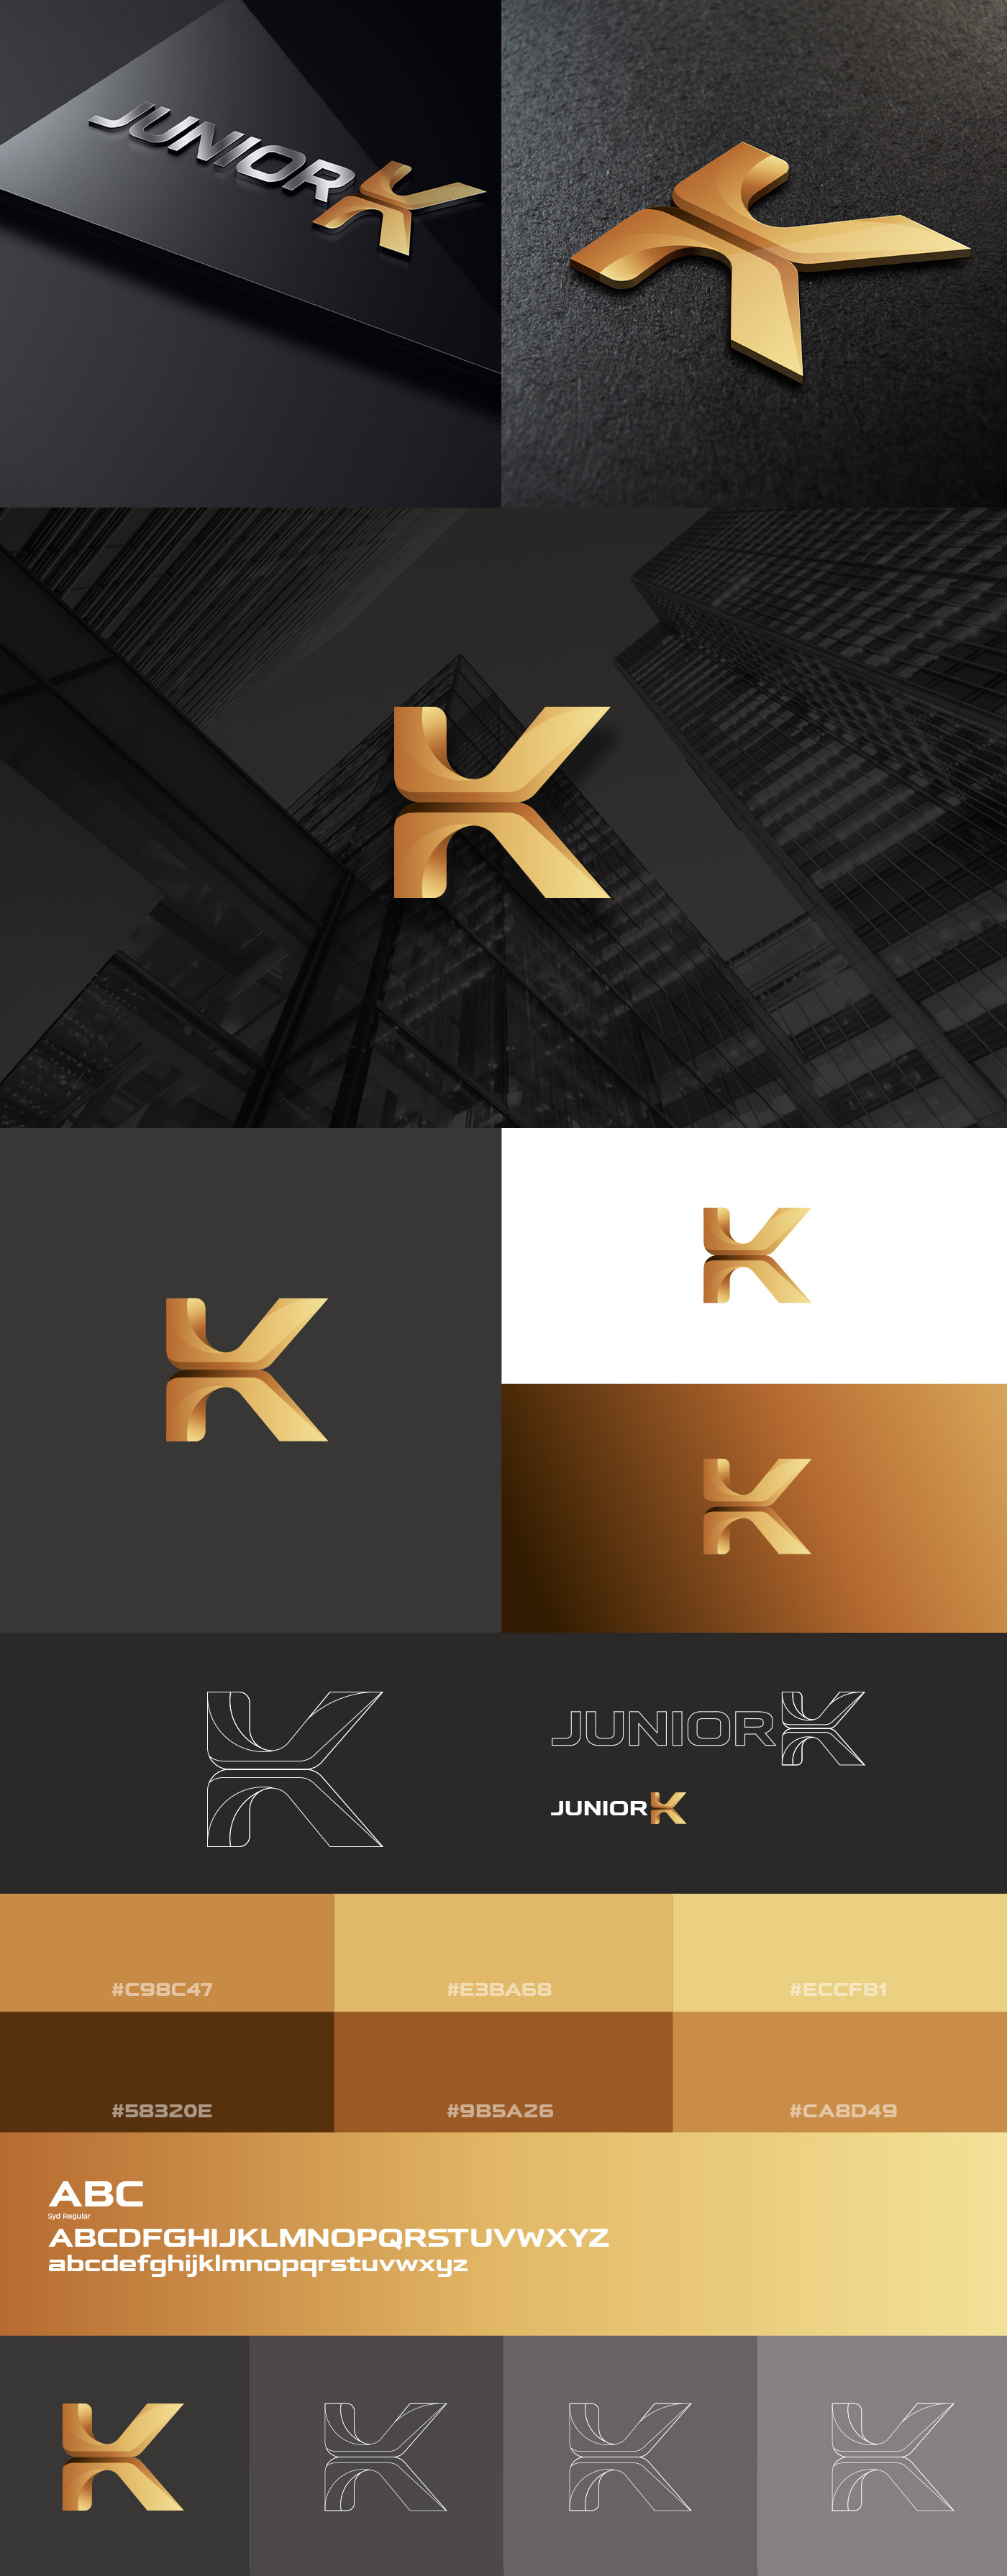 junior k branding junior k branding  gold branding Corporate Profile construction branding k logo k branding K logo design black and gold